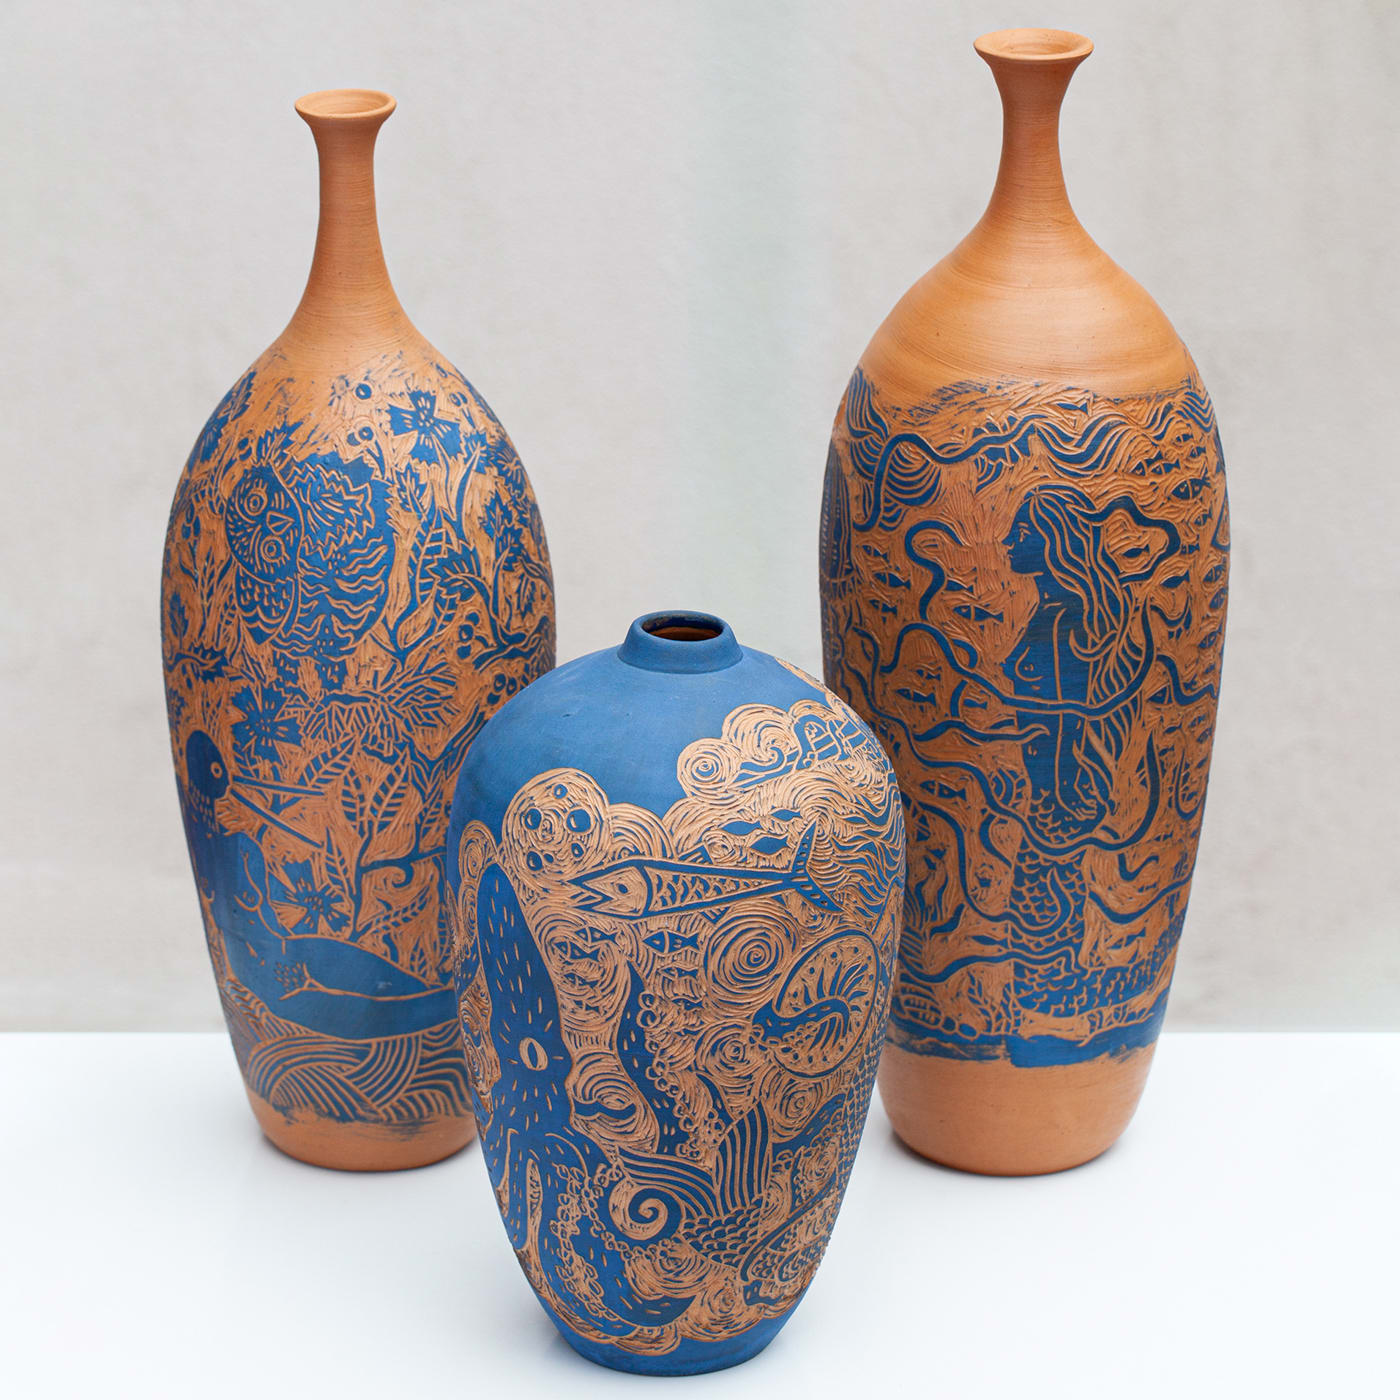 Aironi Heron Vase by Clara Holt and Chiara Zoppei - Clara Holt